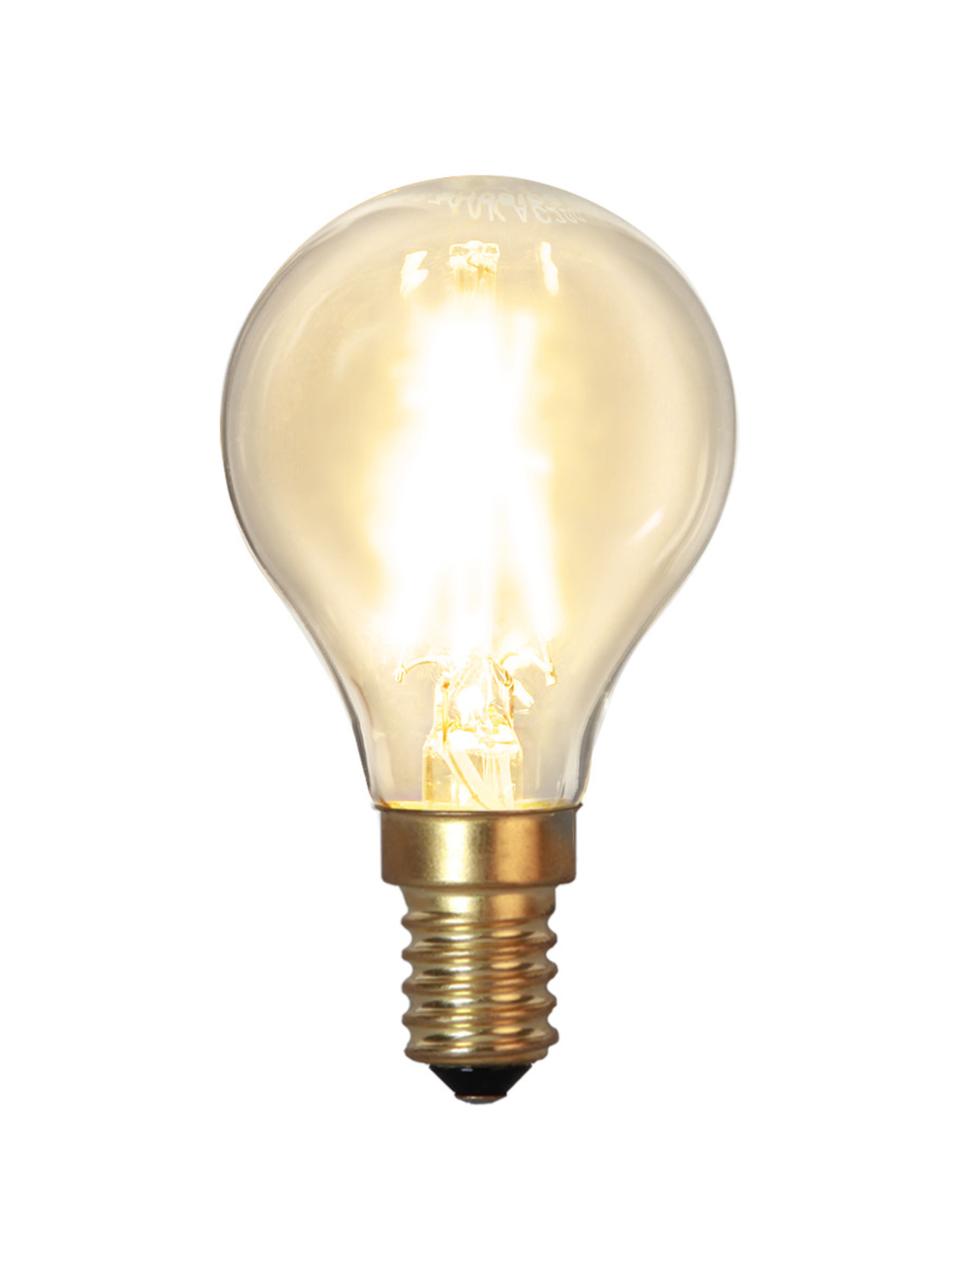 Lampadina E14, 120lm, bianco caldo, 2 pz, Lampadina: vetro, Base lampadina: alluminio, Trasparente, ottonato, Ø 5 x Alt. 8 cm